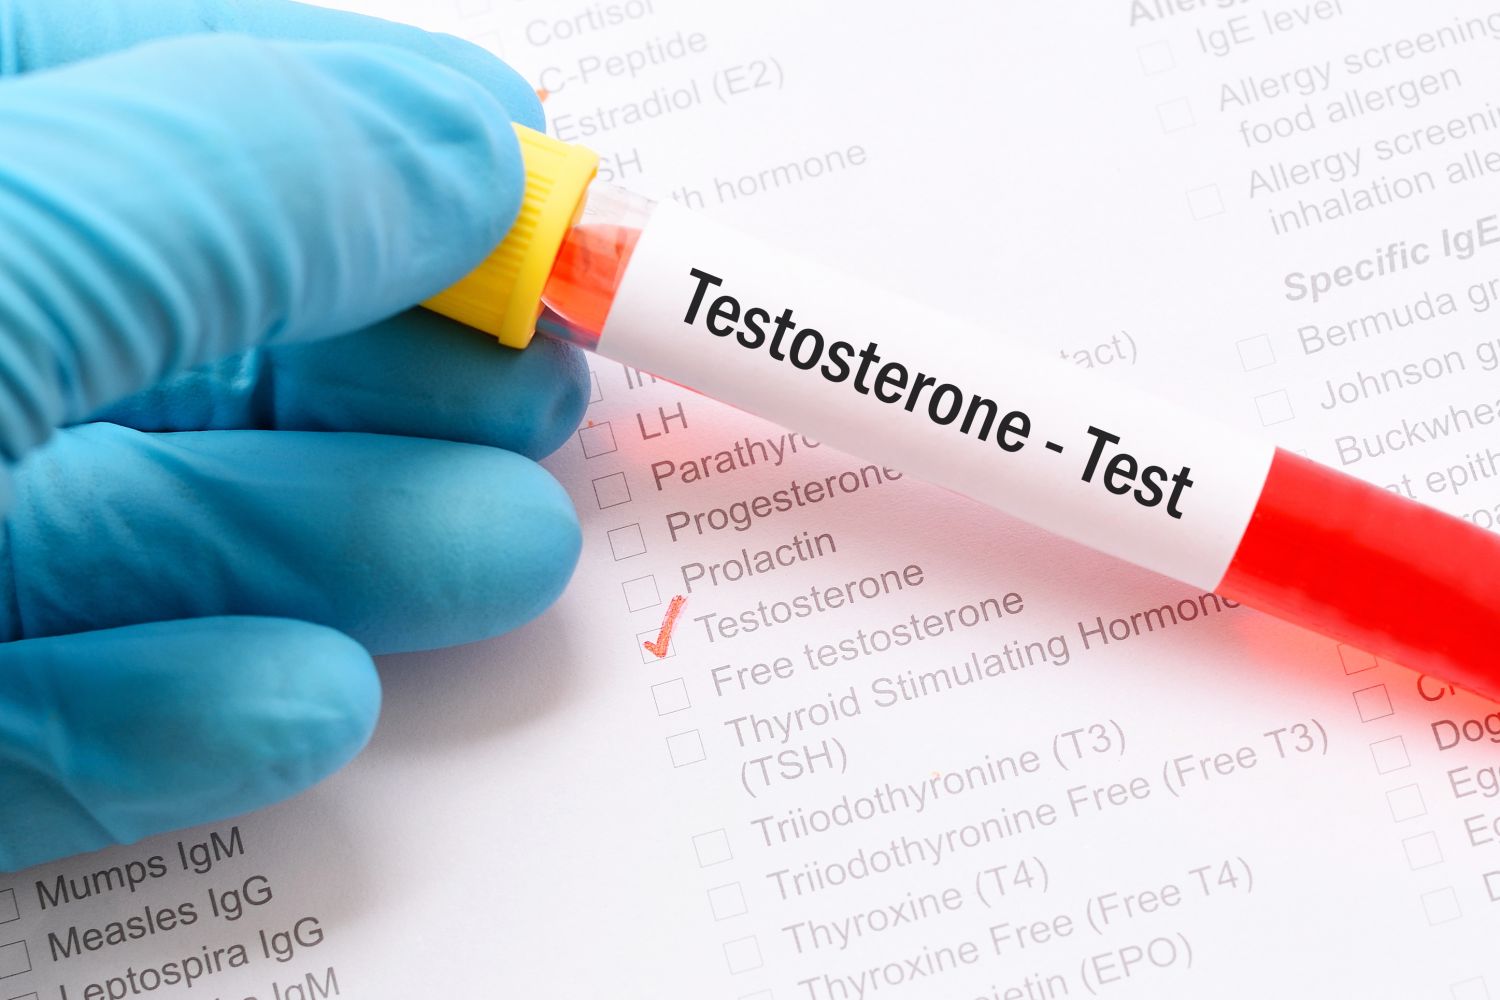 7 seltsame Fakten über testosteron bestellen